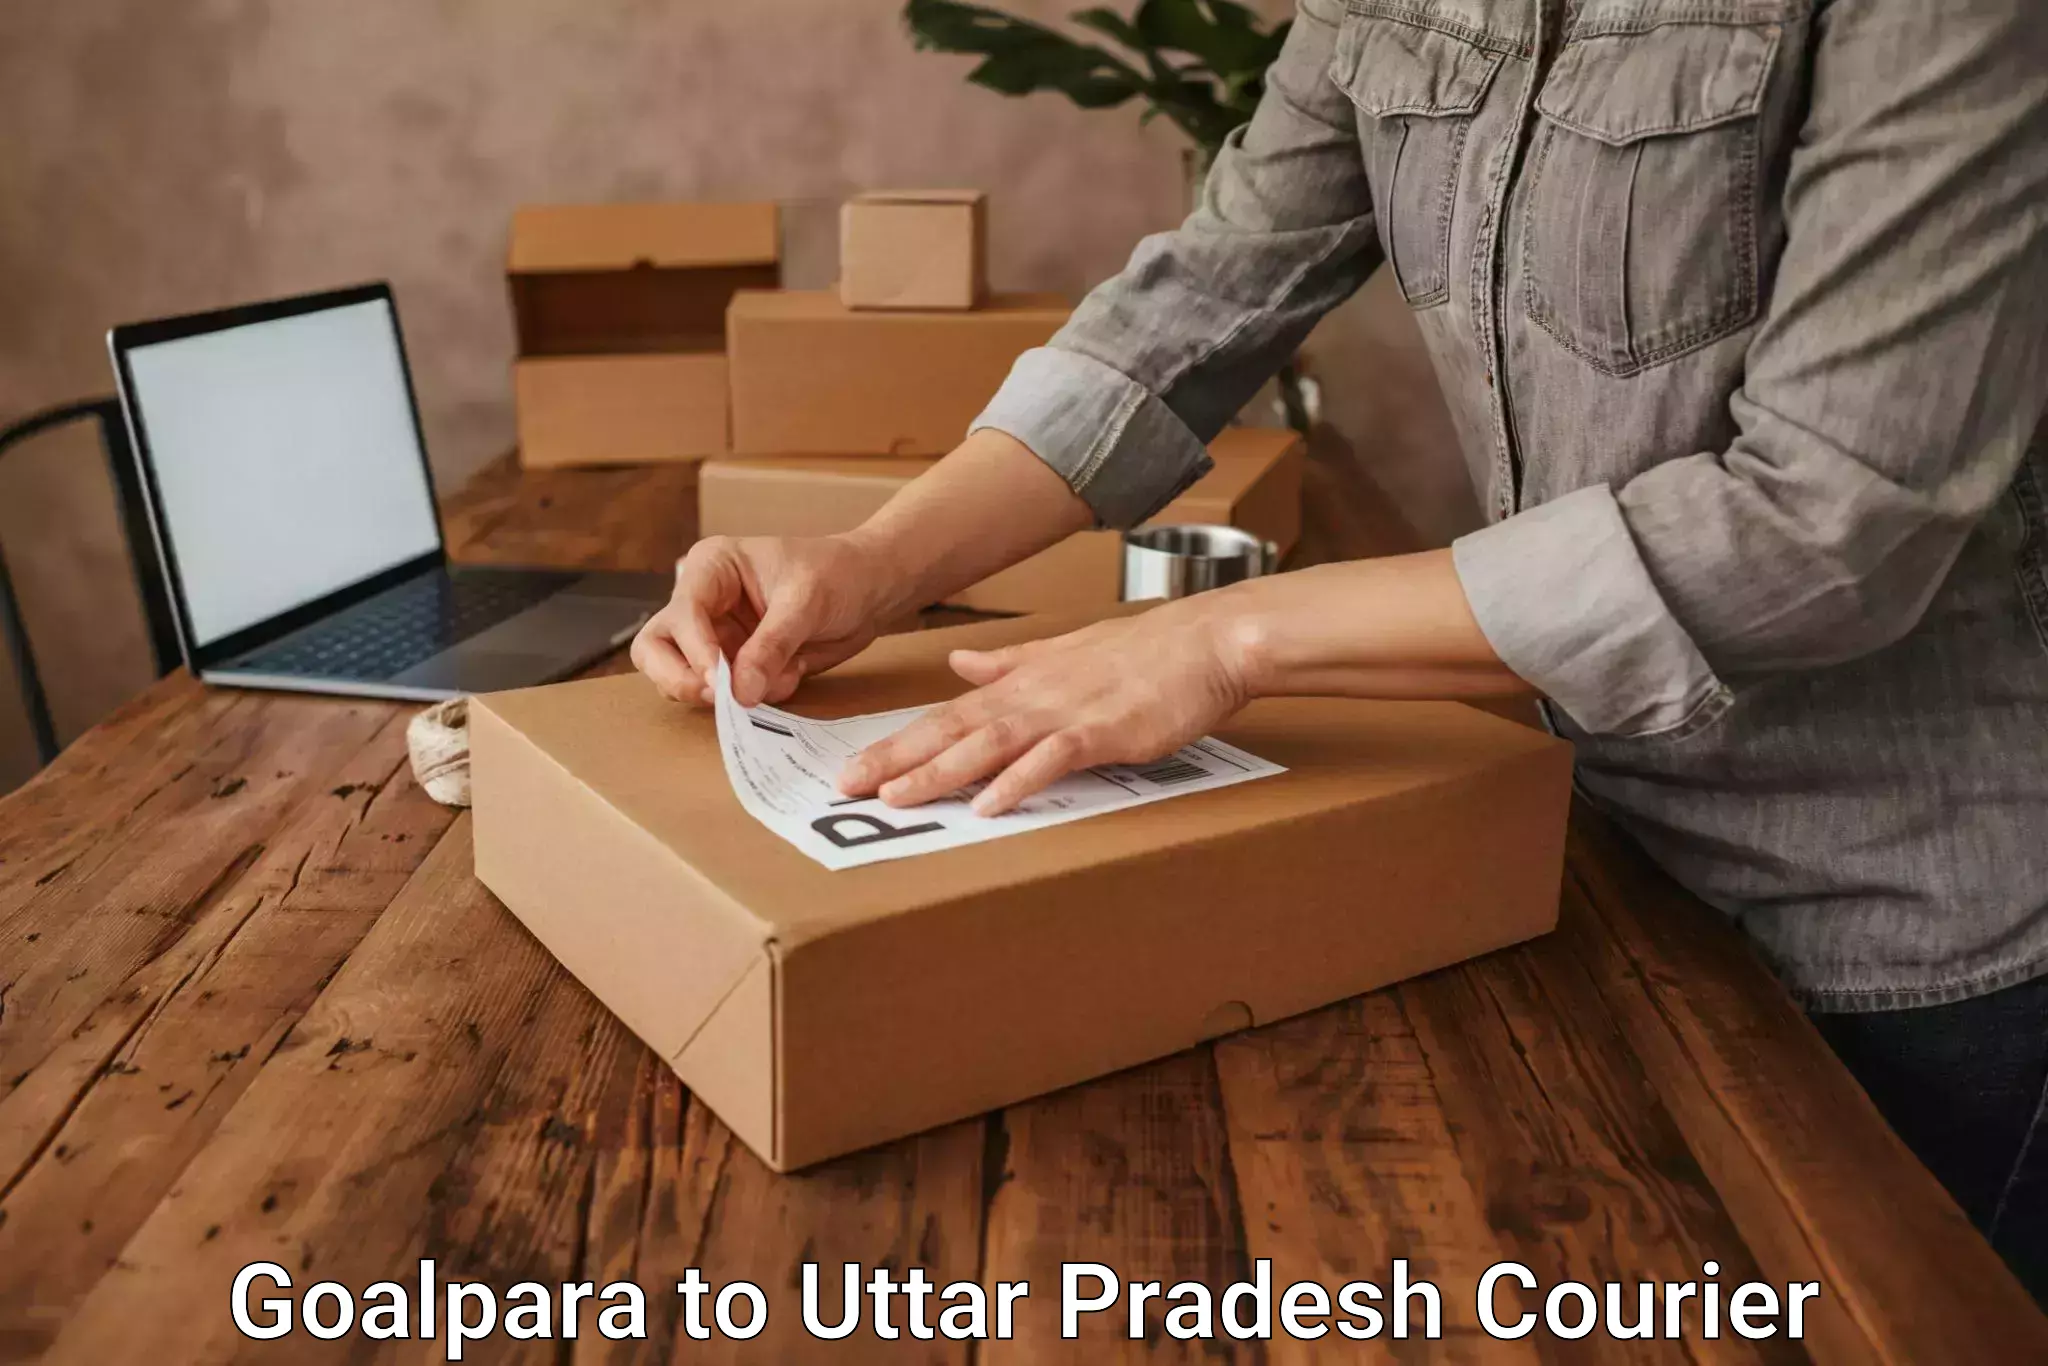 Reliable delivery network Goalpara to Shohratgarh